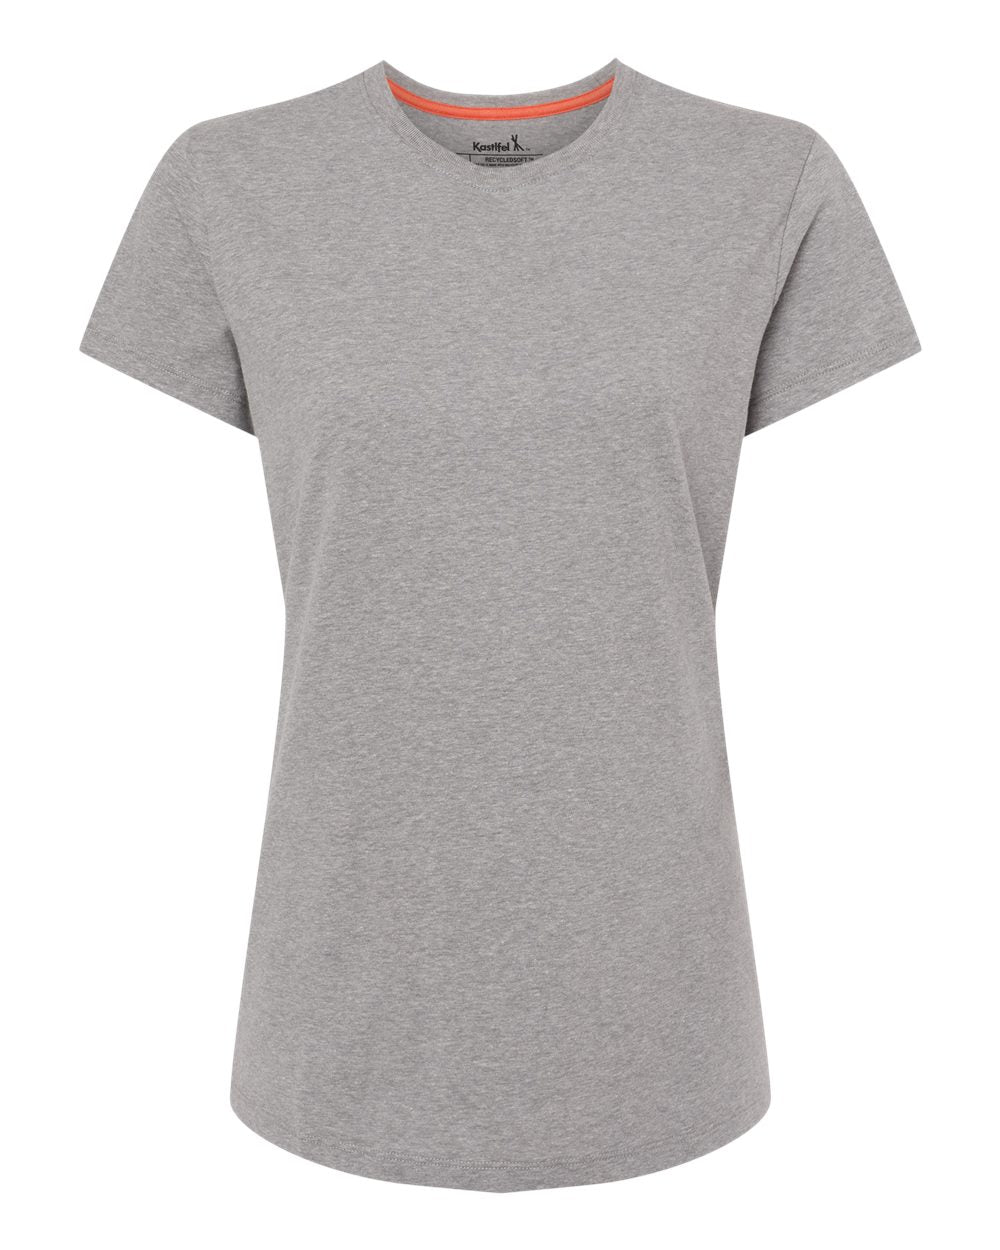 Customizable Kastlfel recycledsoft t-shirt women in style grey